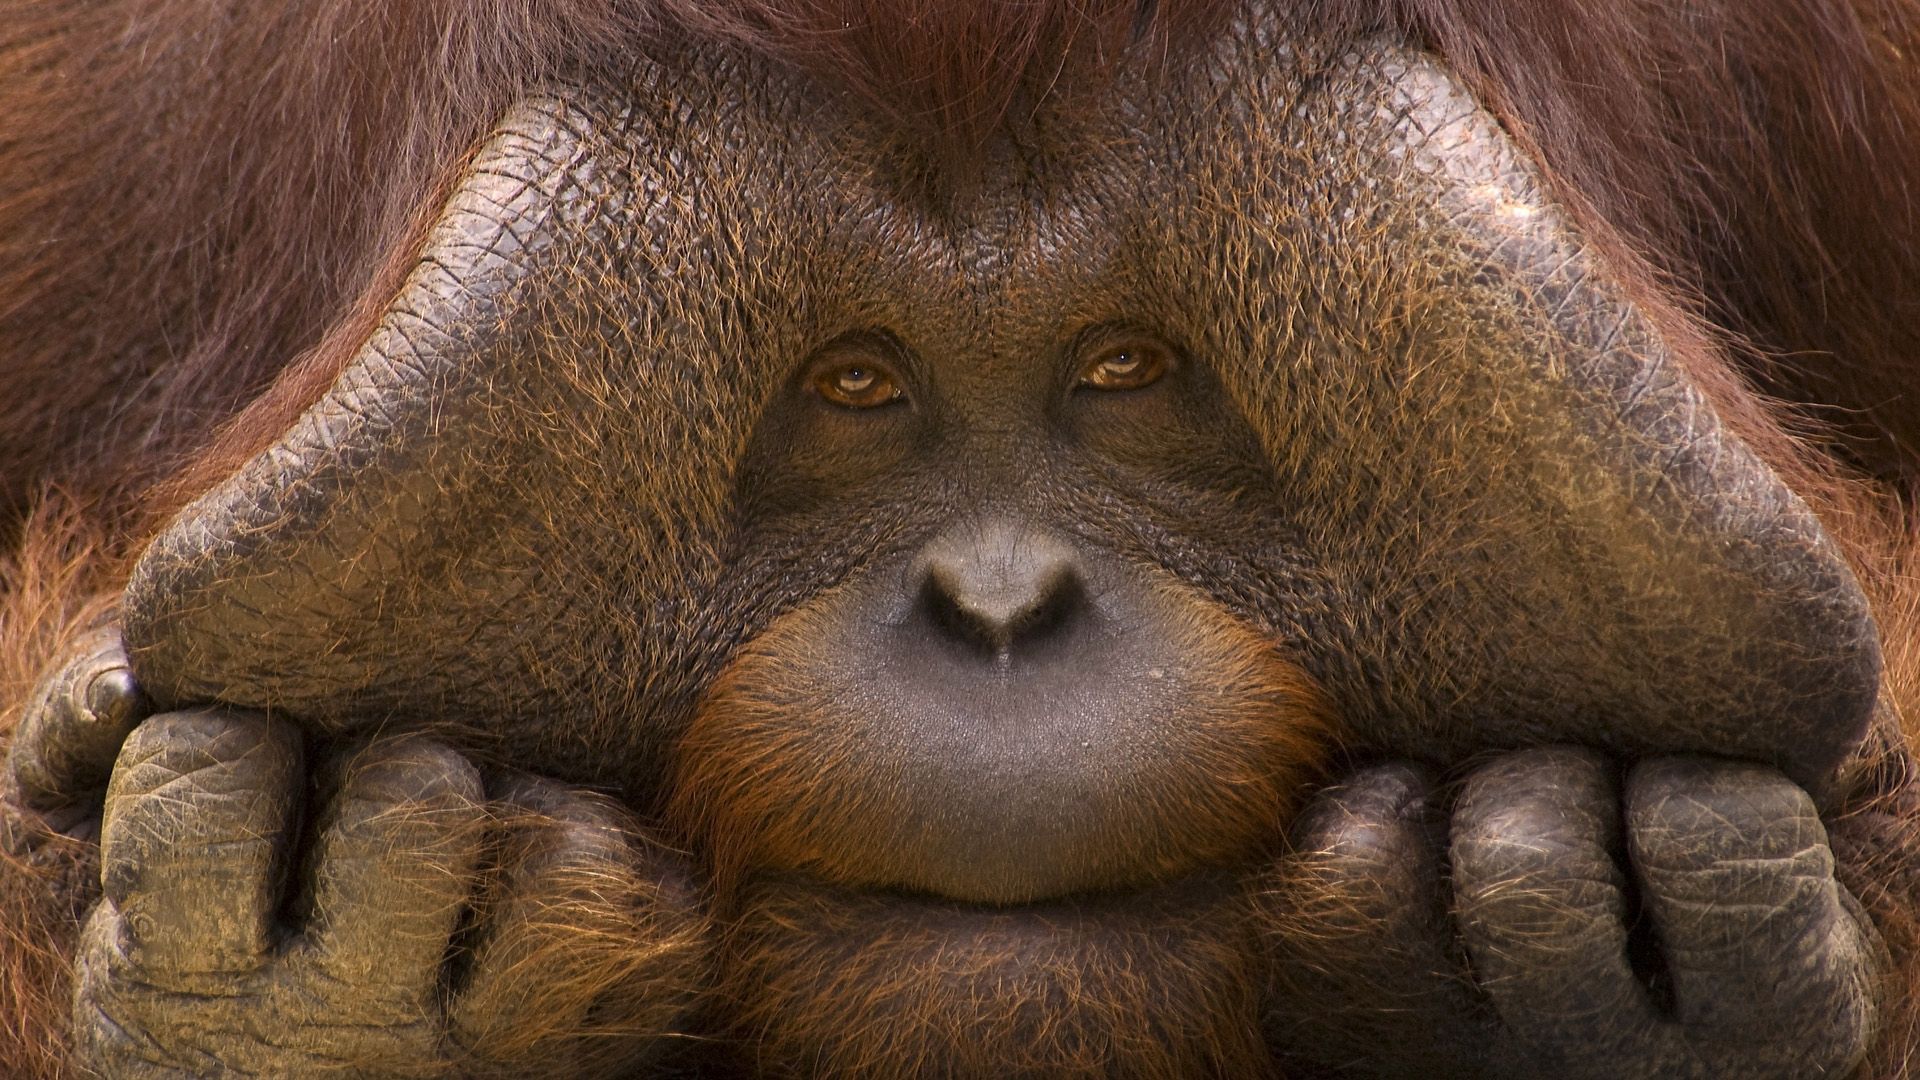 154299 descargar imagen animales, bozal, un mono, mono, manos, lana: fondos de pantalla y protectores de pantalla gratis